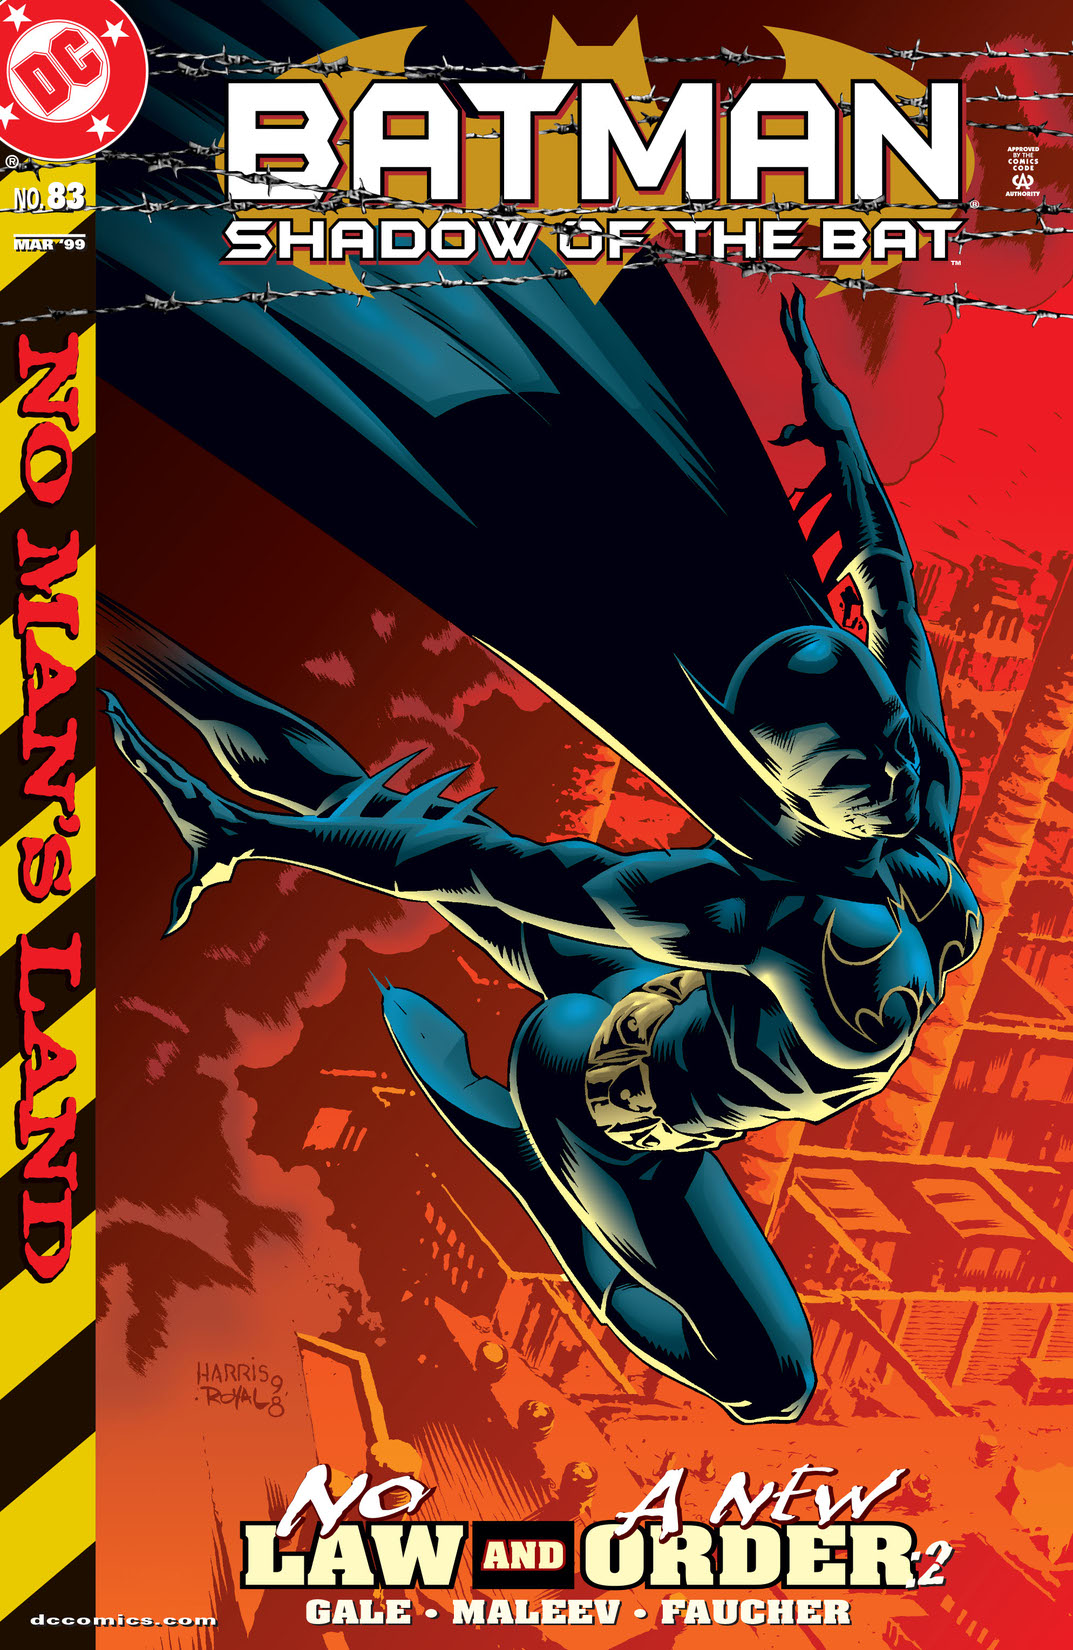 Batman: Shadow of the Bat #83 preview images